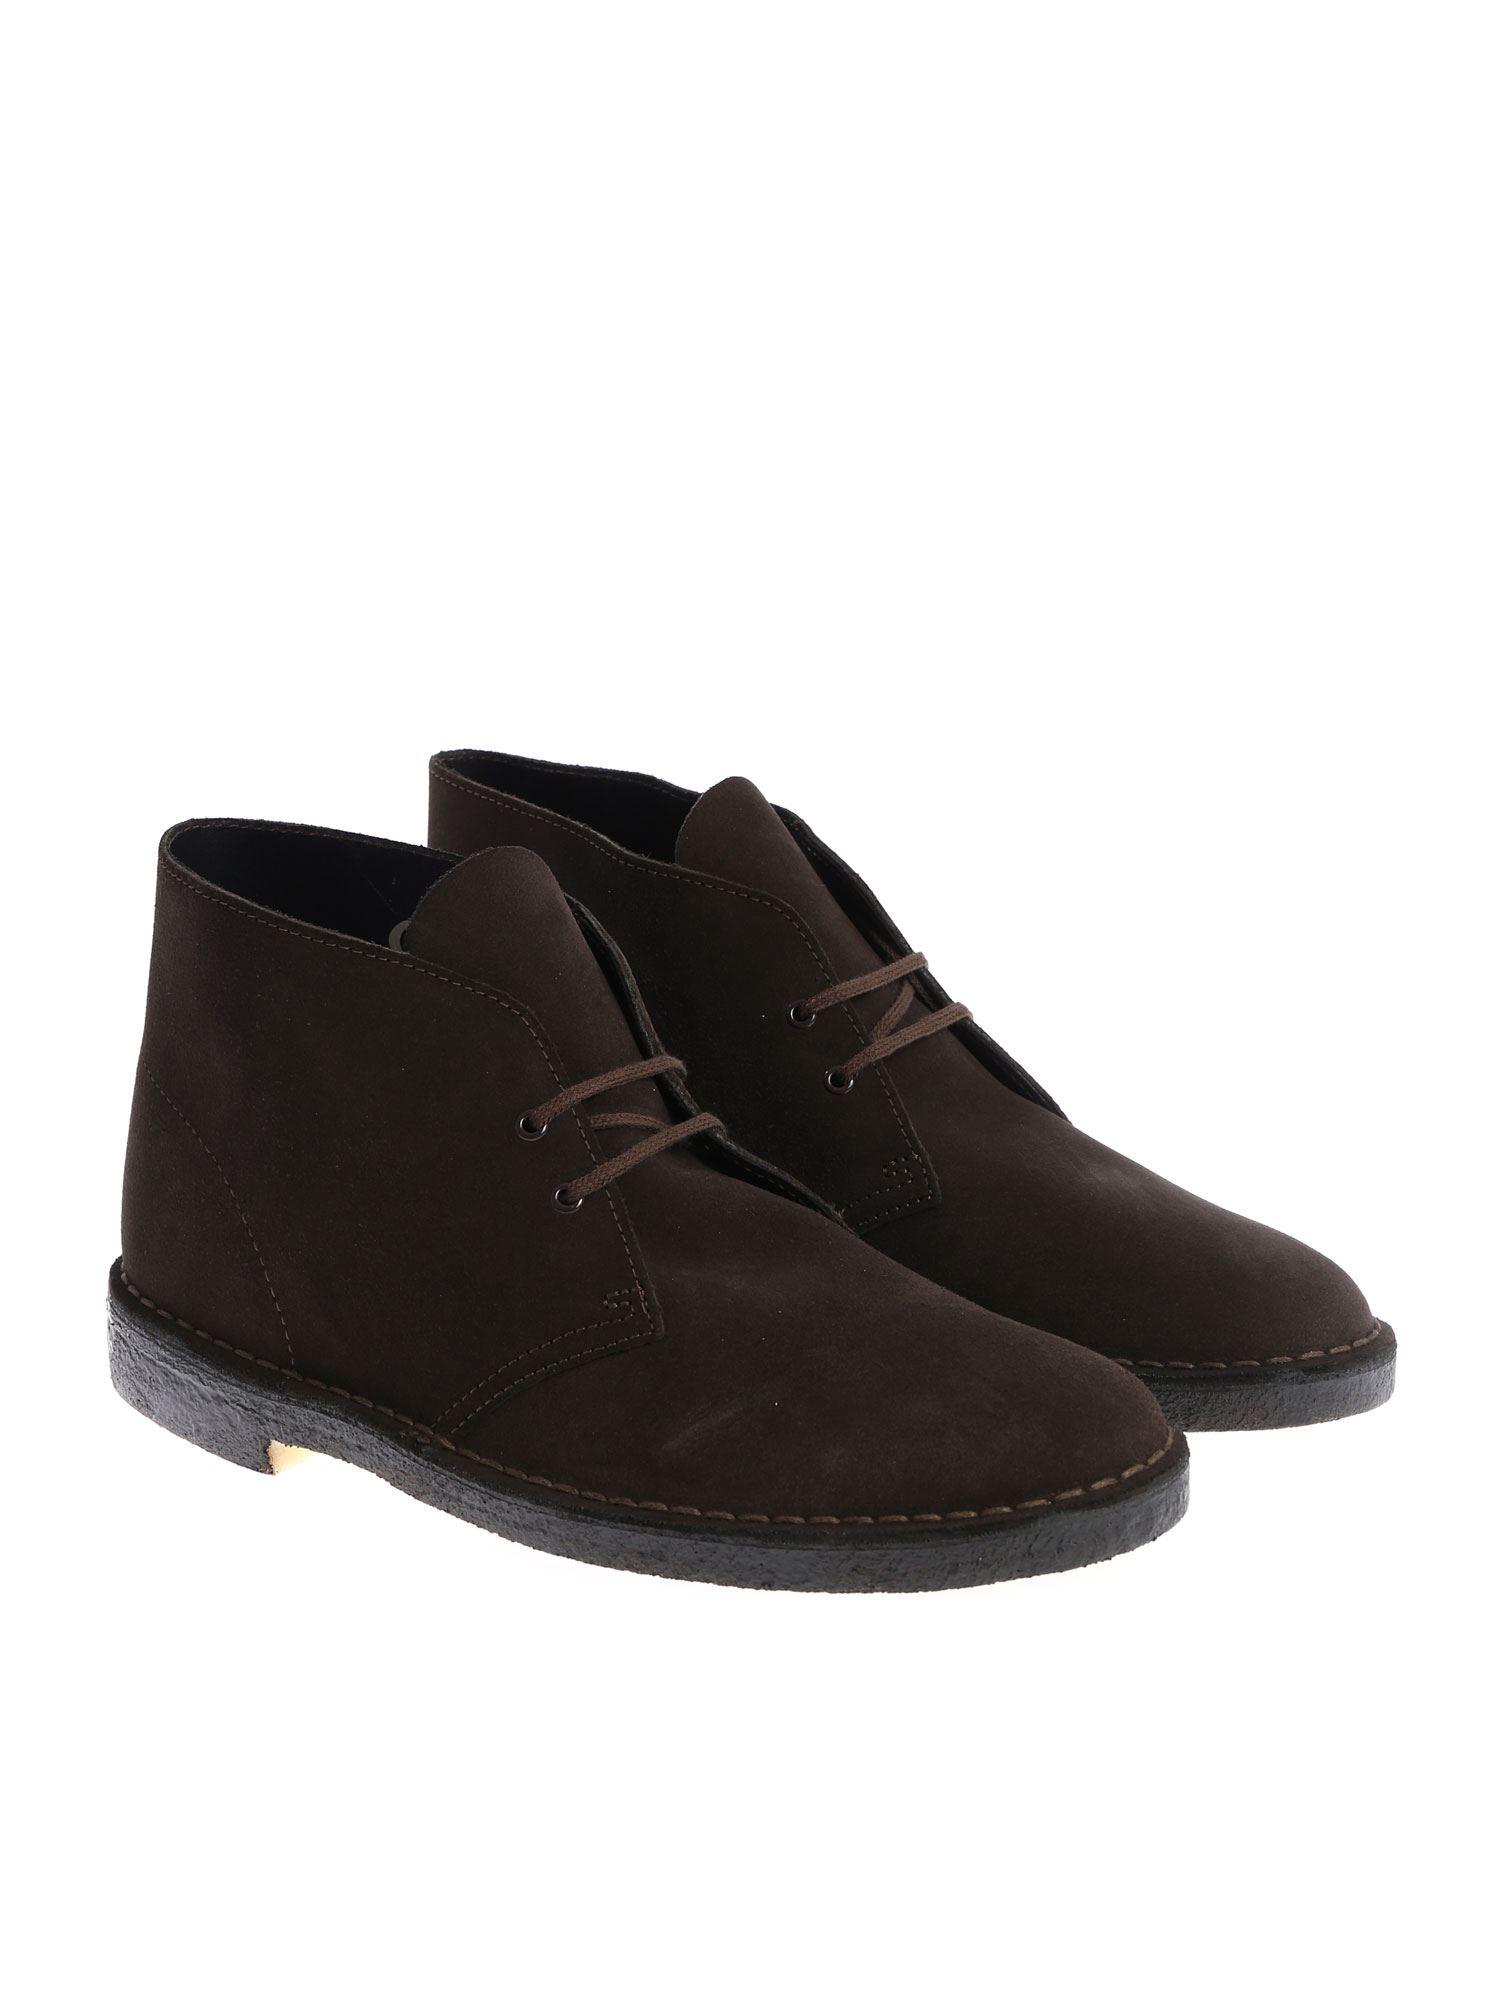 Clarks Dark Brown Suede Shoes for Men - Lyst